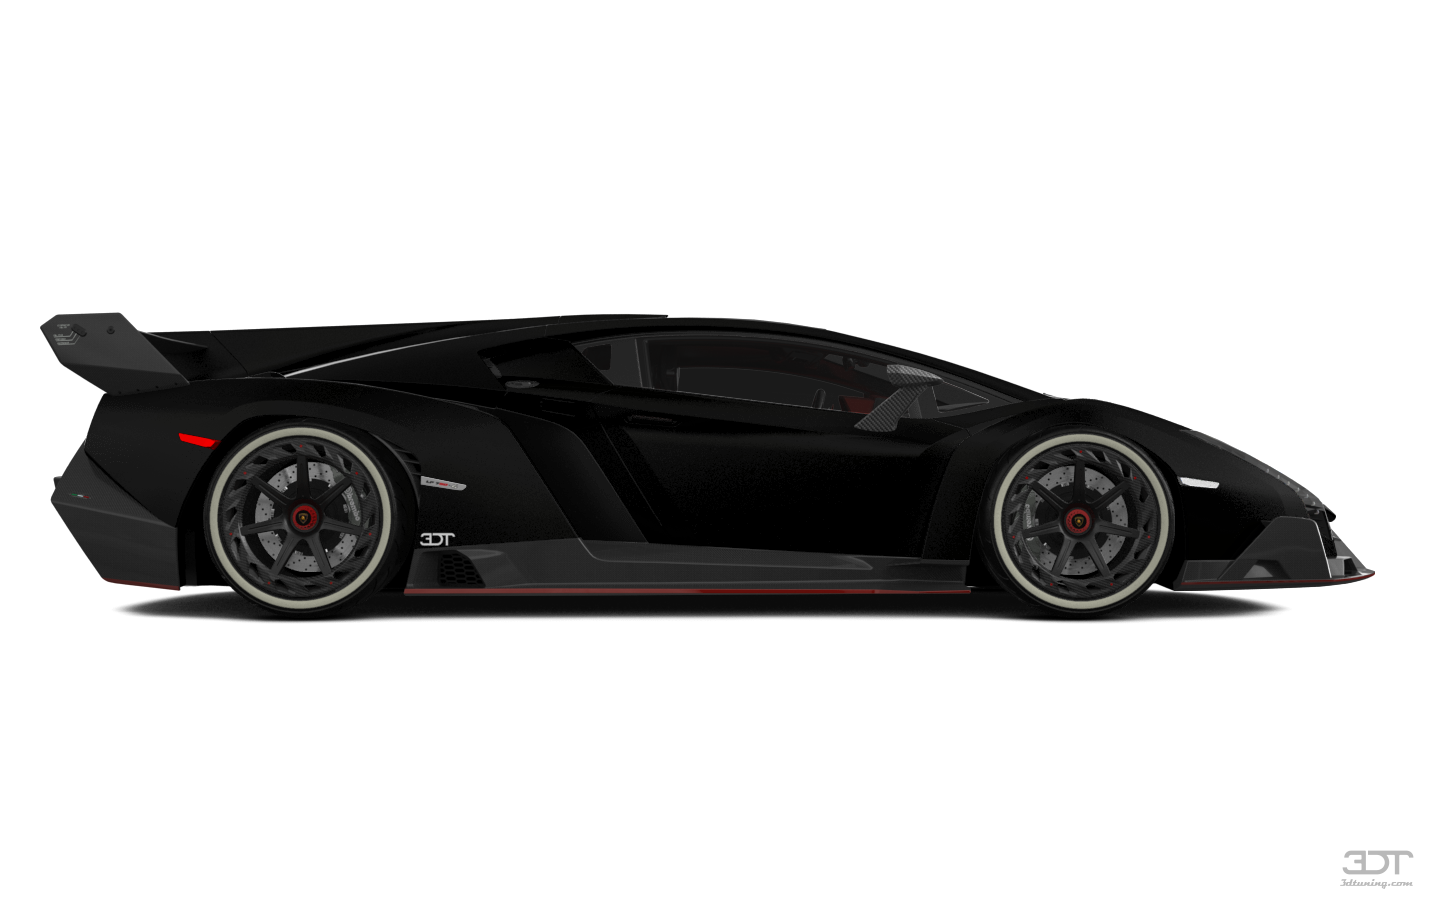 Lamborghini Veneno 2 Door Coupe 2013 tuning